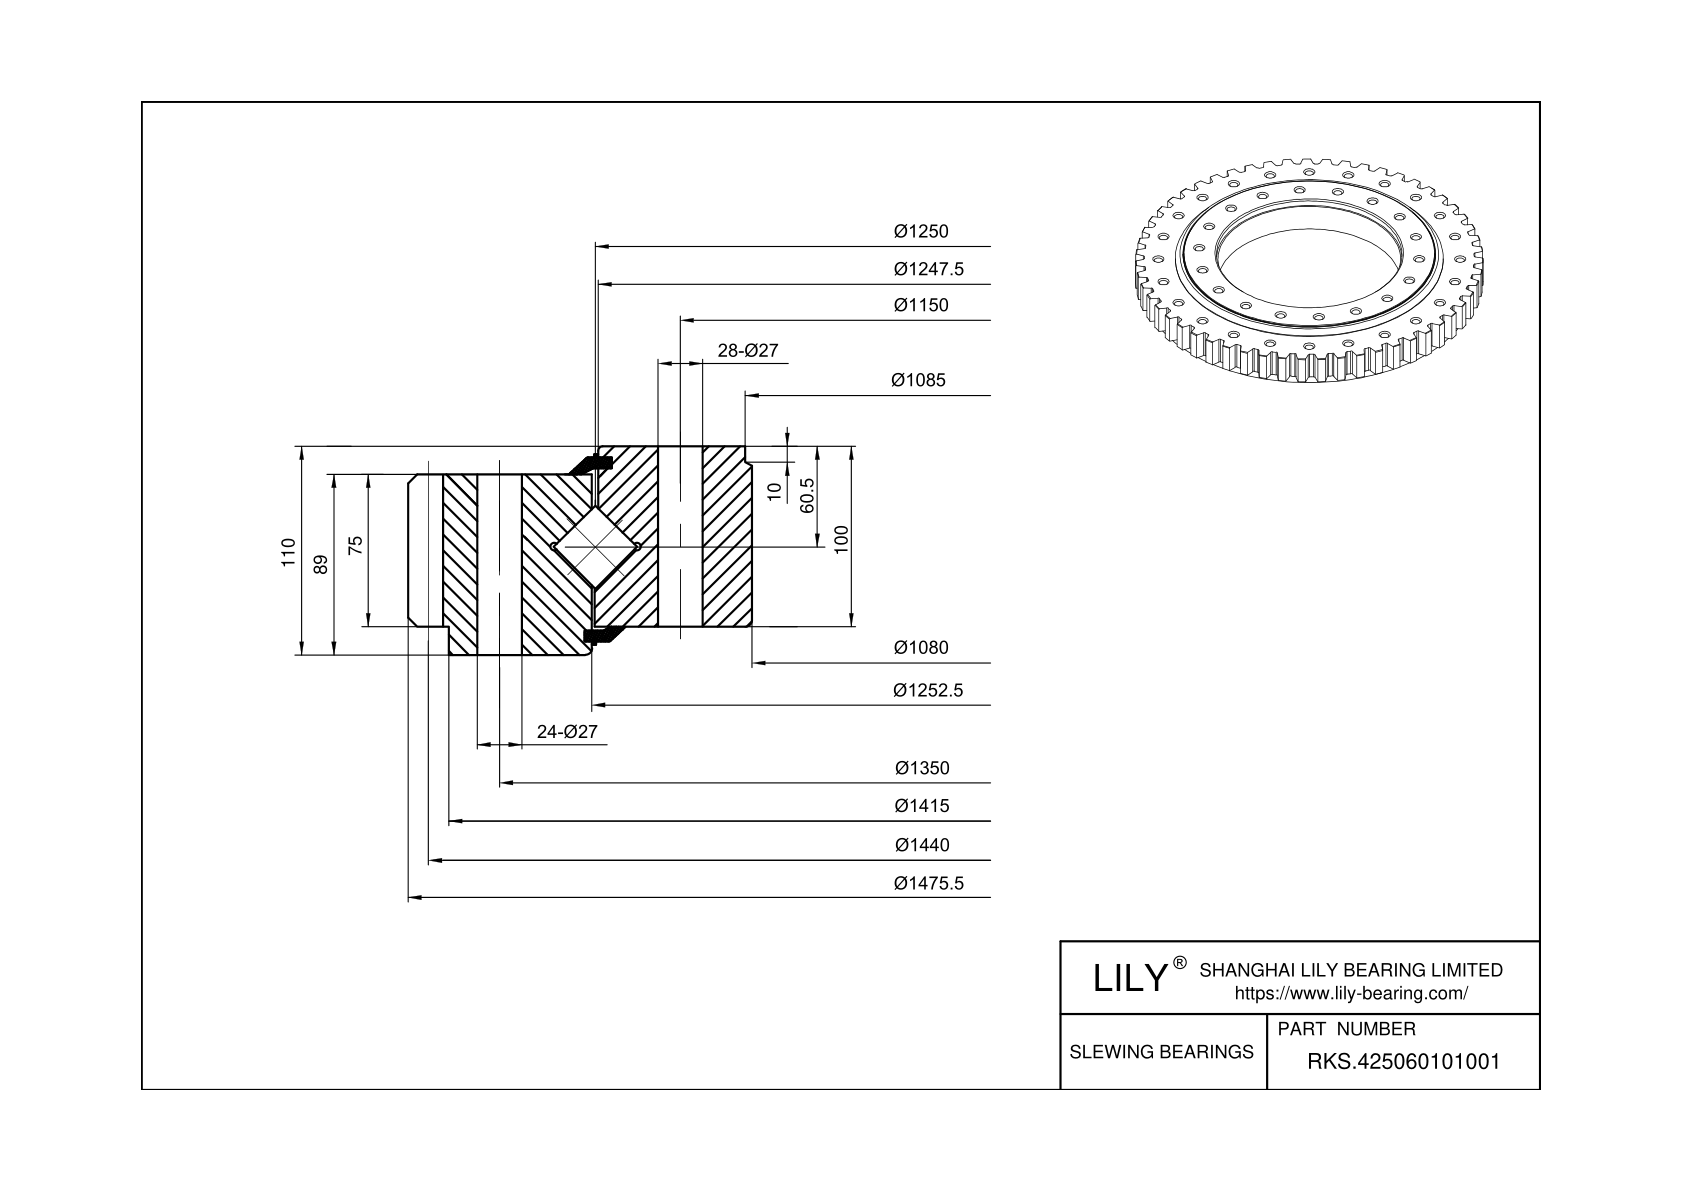 RKS.425060101001 Cross Roller Slewing Ring Bearing cad drawing